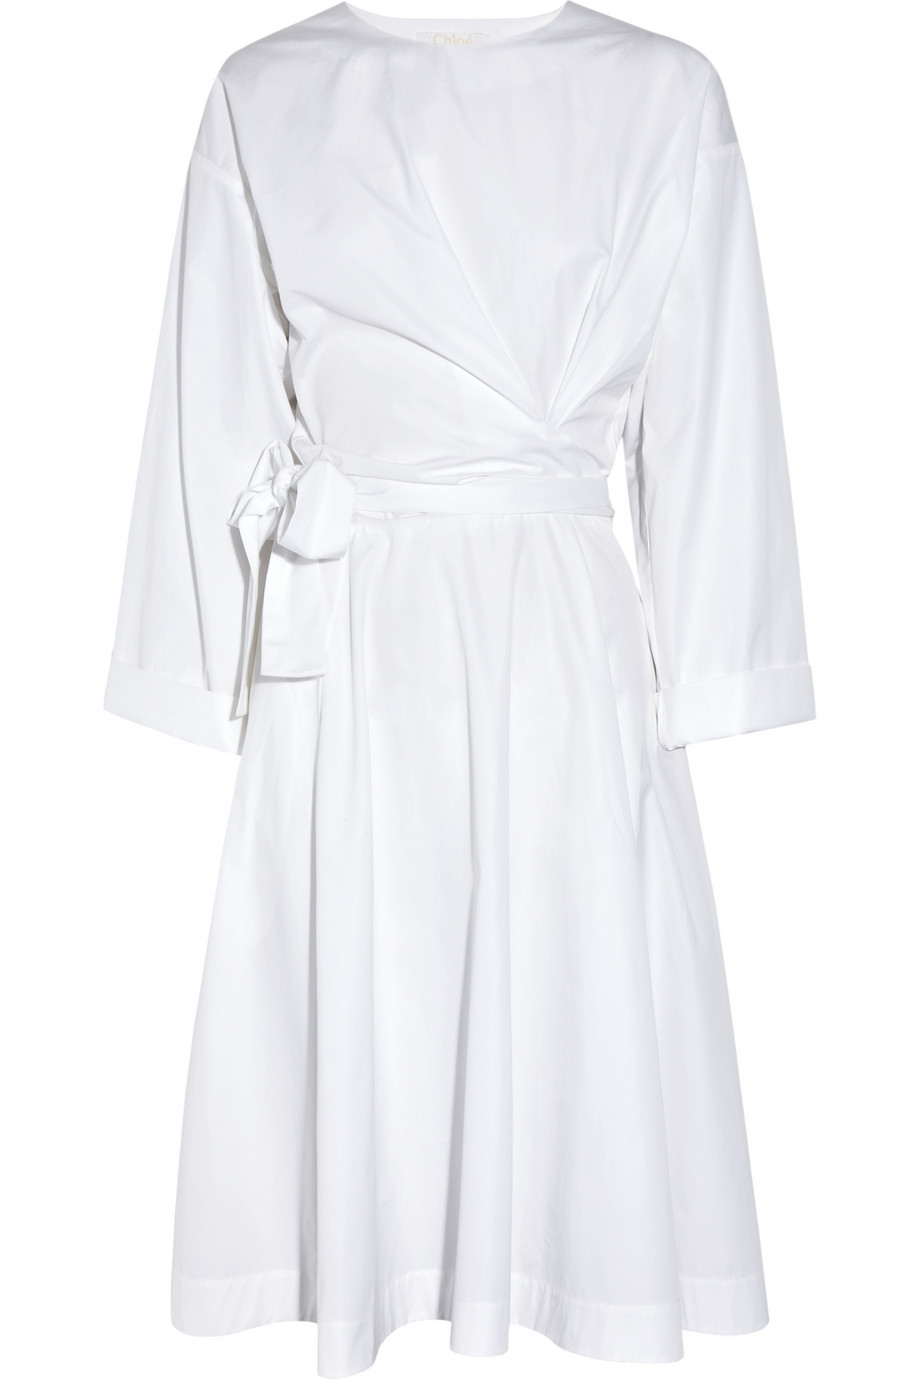 Chloé Belted Cotton-poplin Dress in White | Lyst